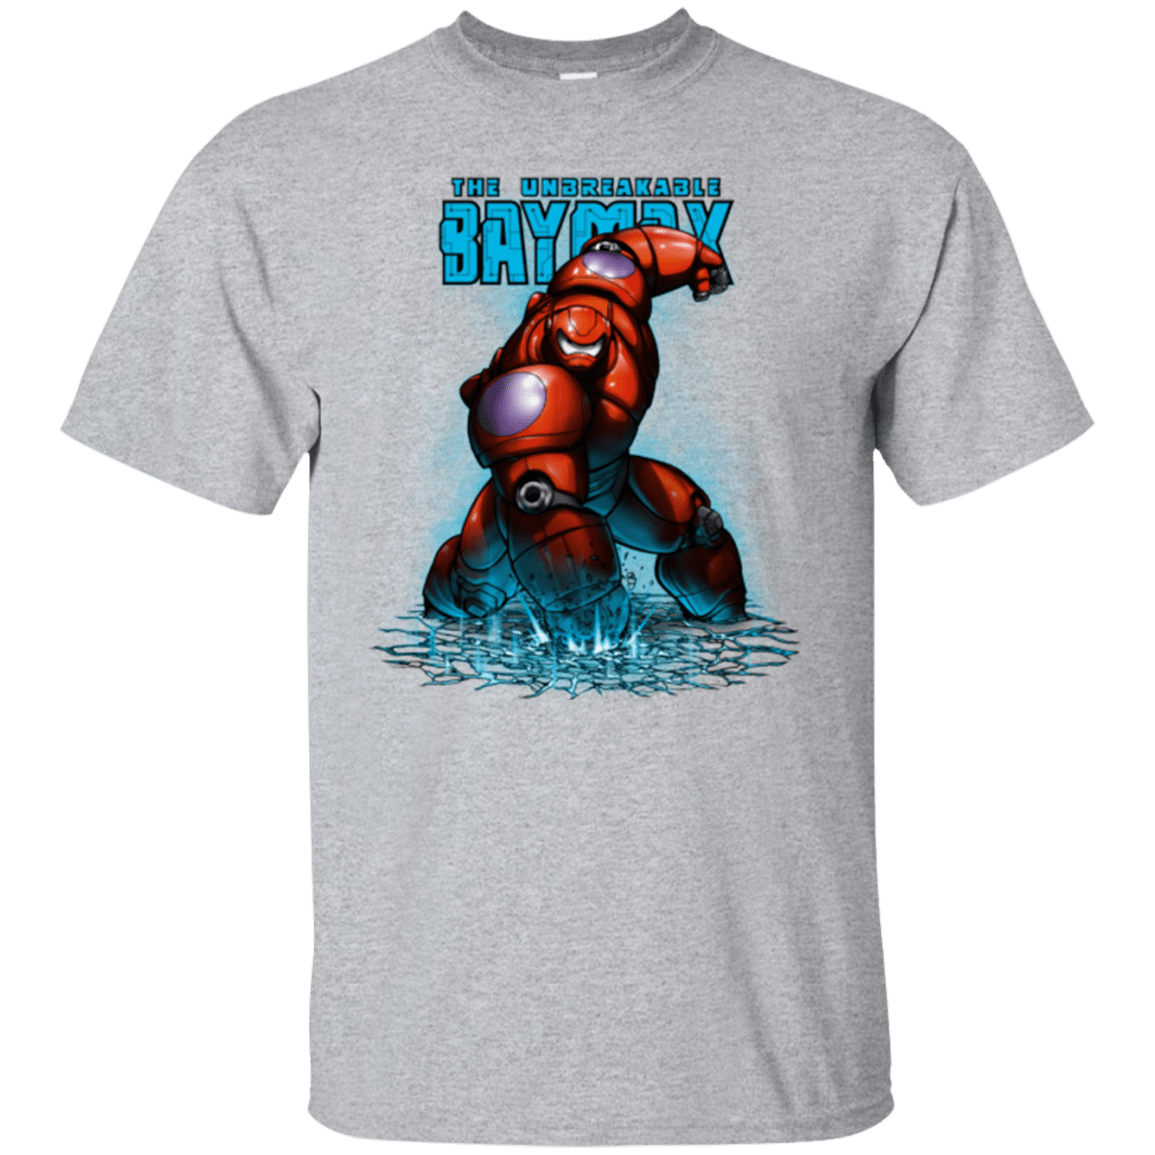 T-Shirts Sport Grey / Small Unbreakable Hero T-Shirt